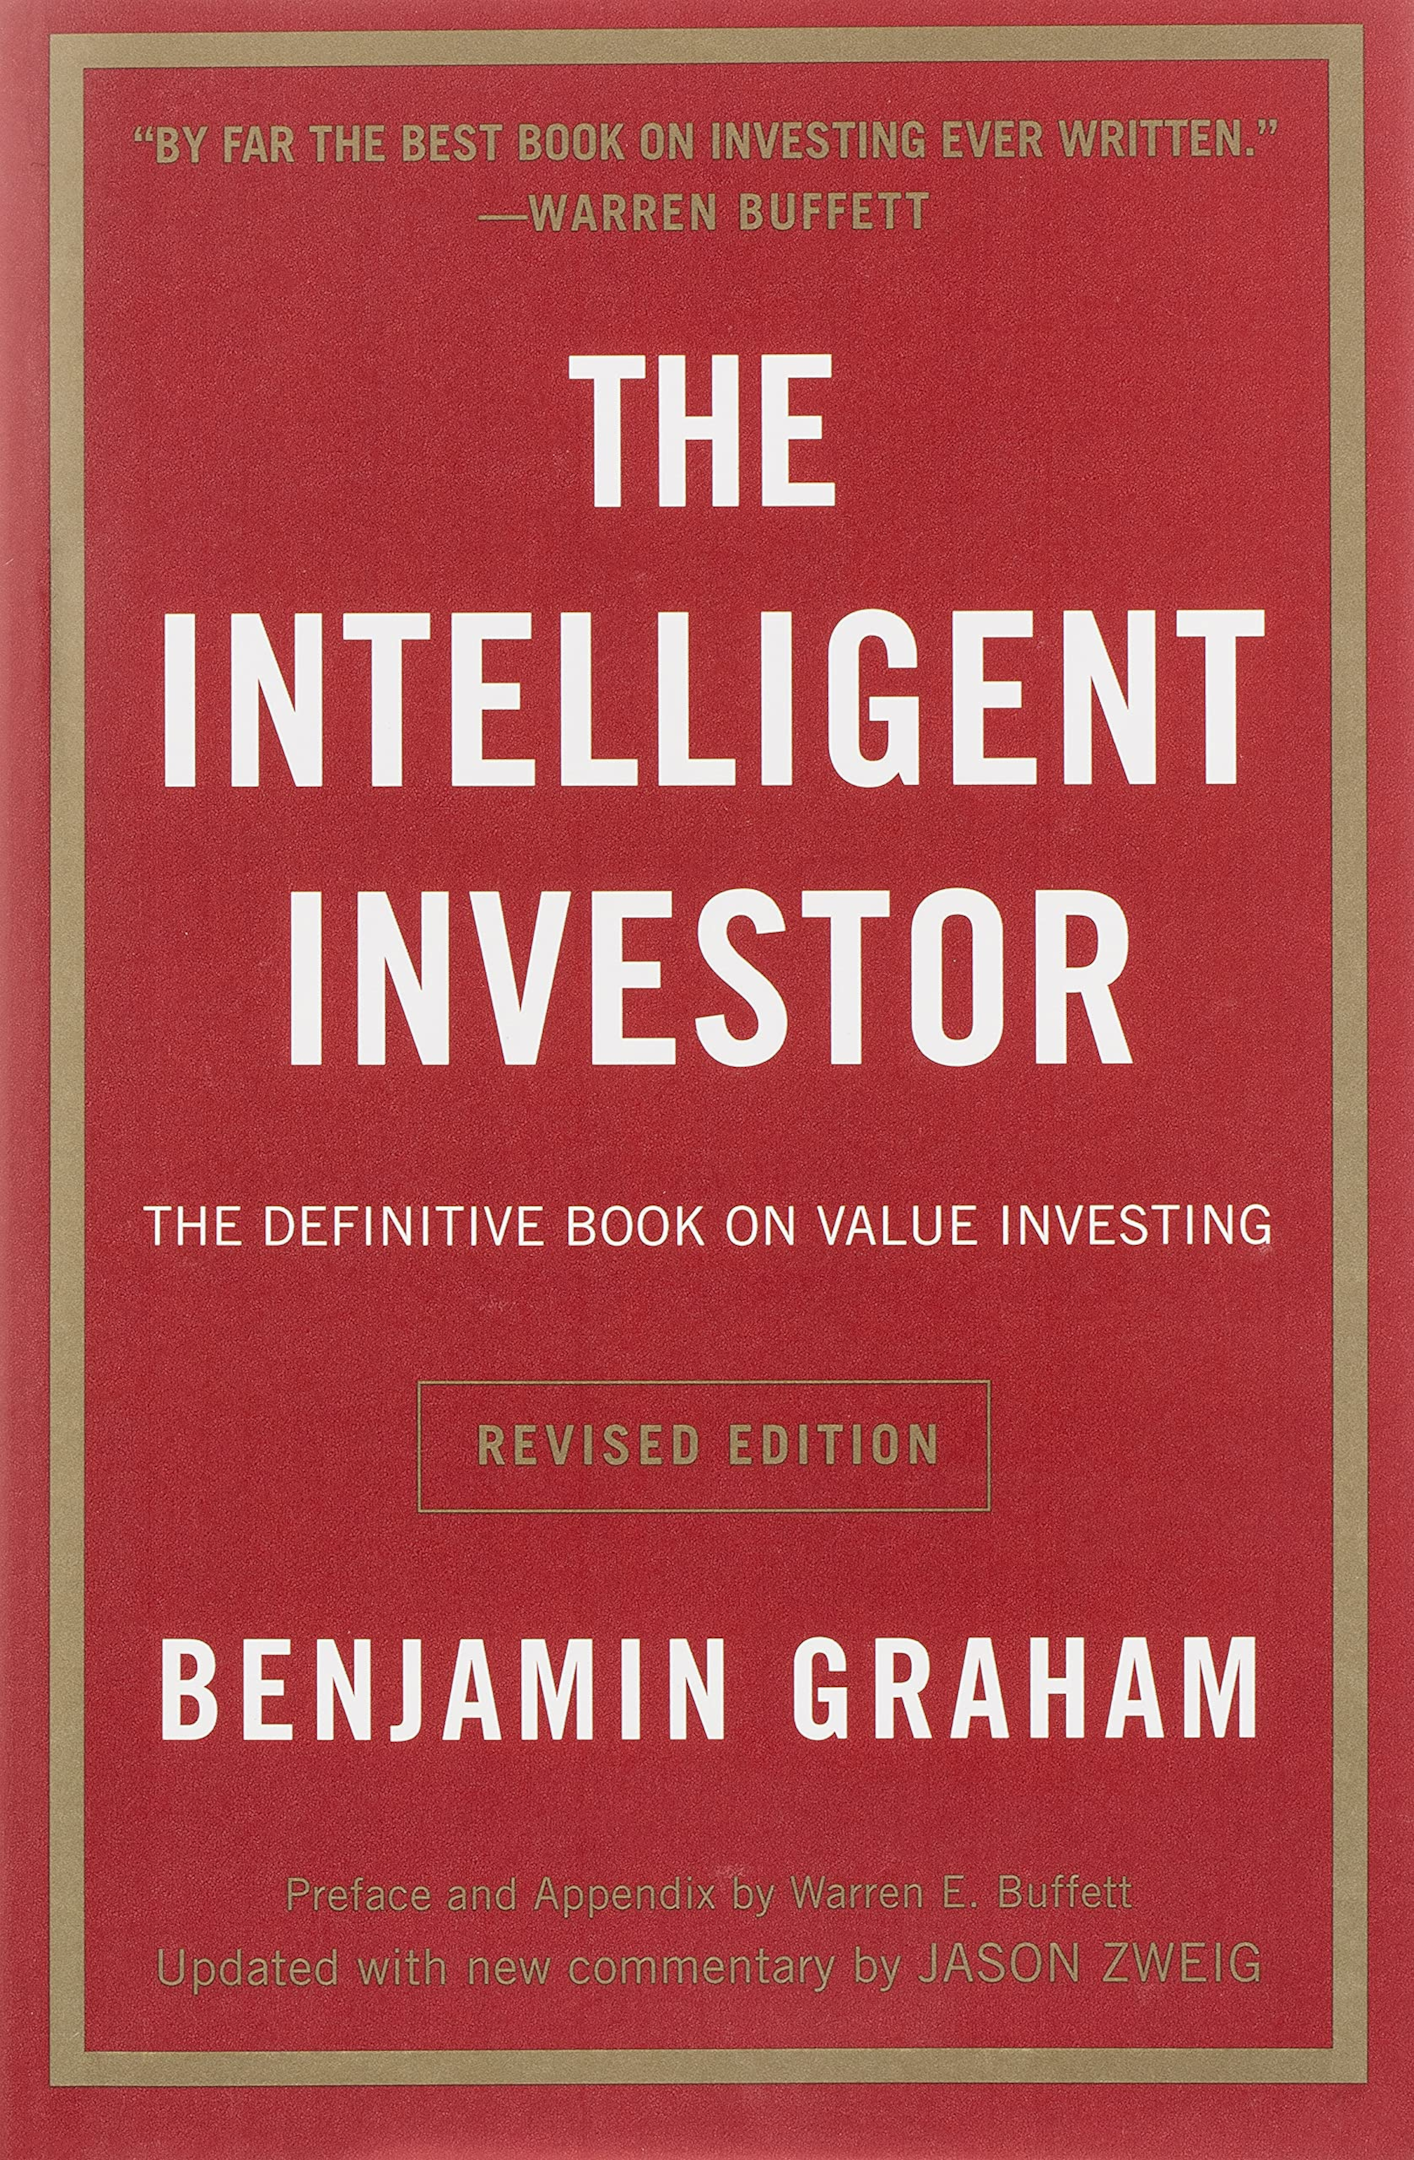 The Intelligent Investor | Photo from Amazon.com Website